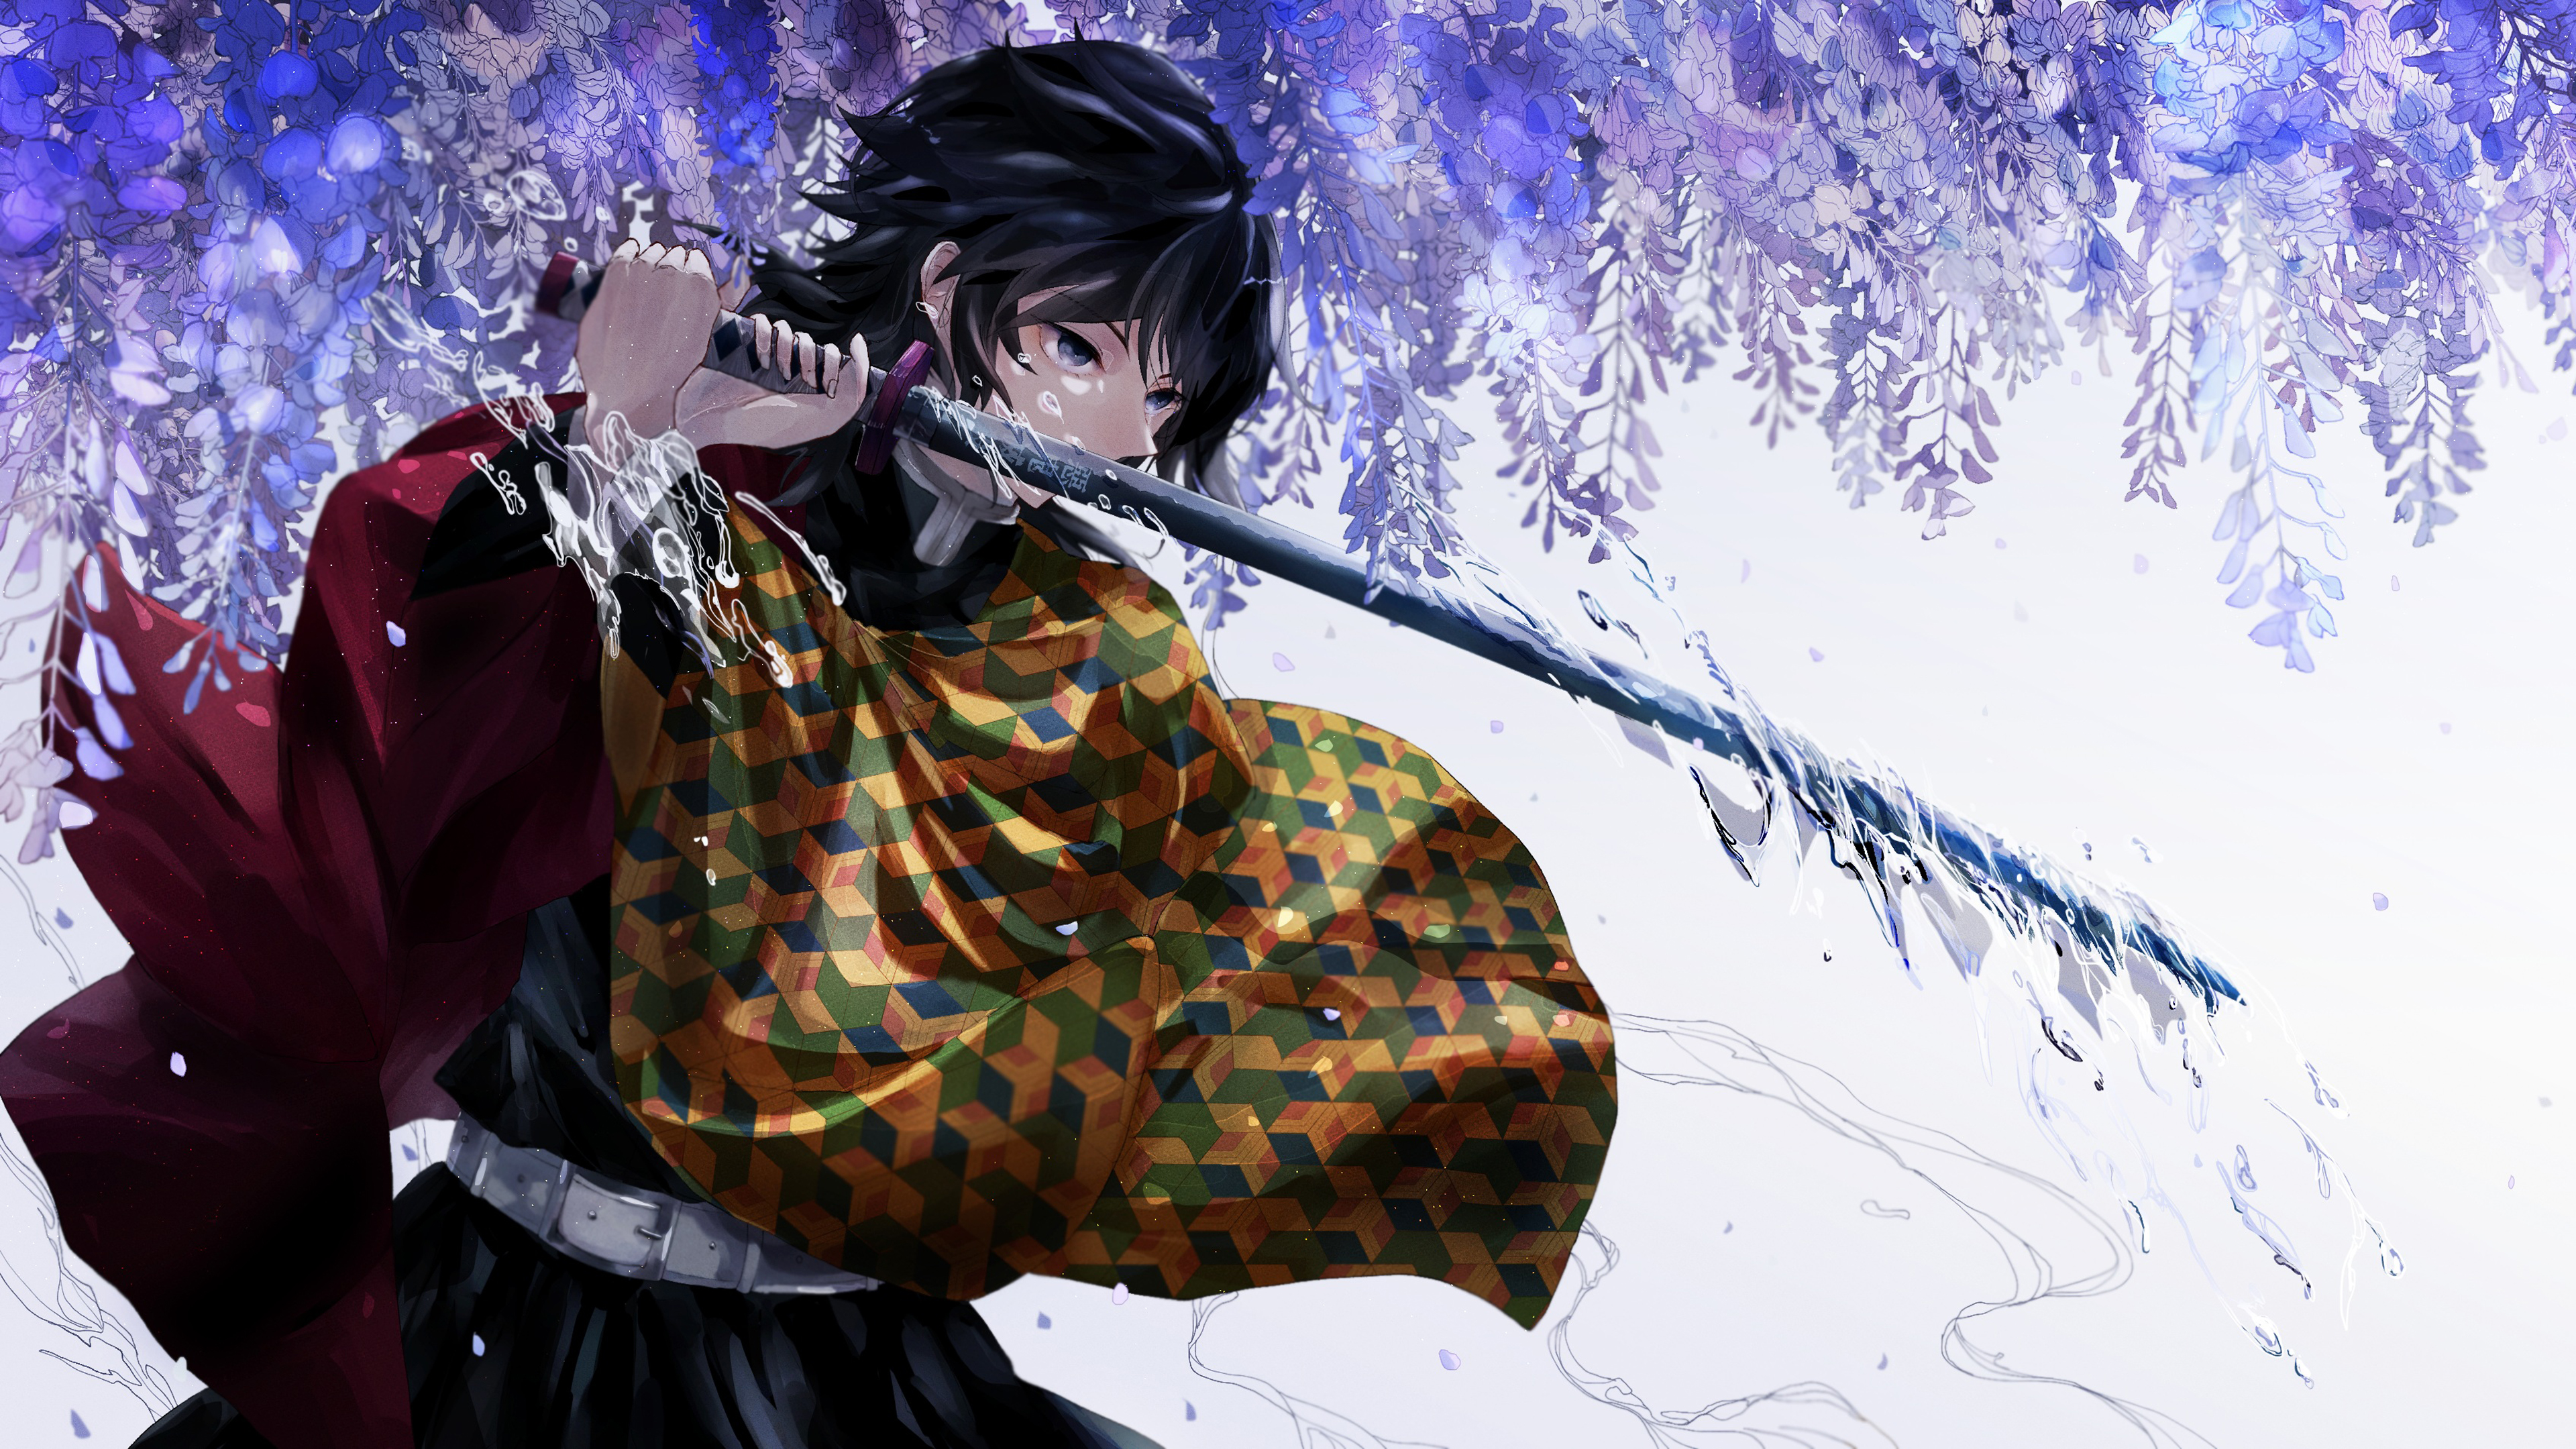 Demon Slayer Giyuu Tomioka With A Long Sharp Sword Under Purple Flowers